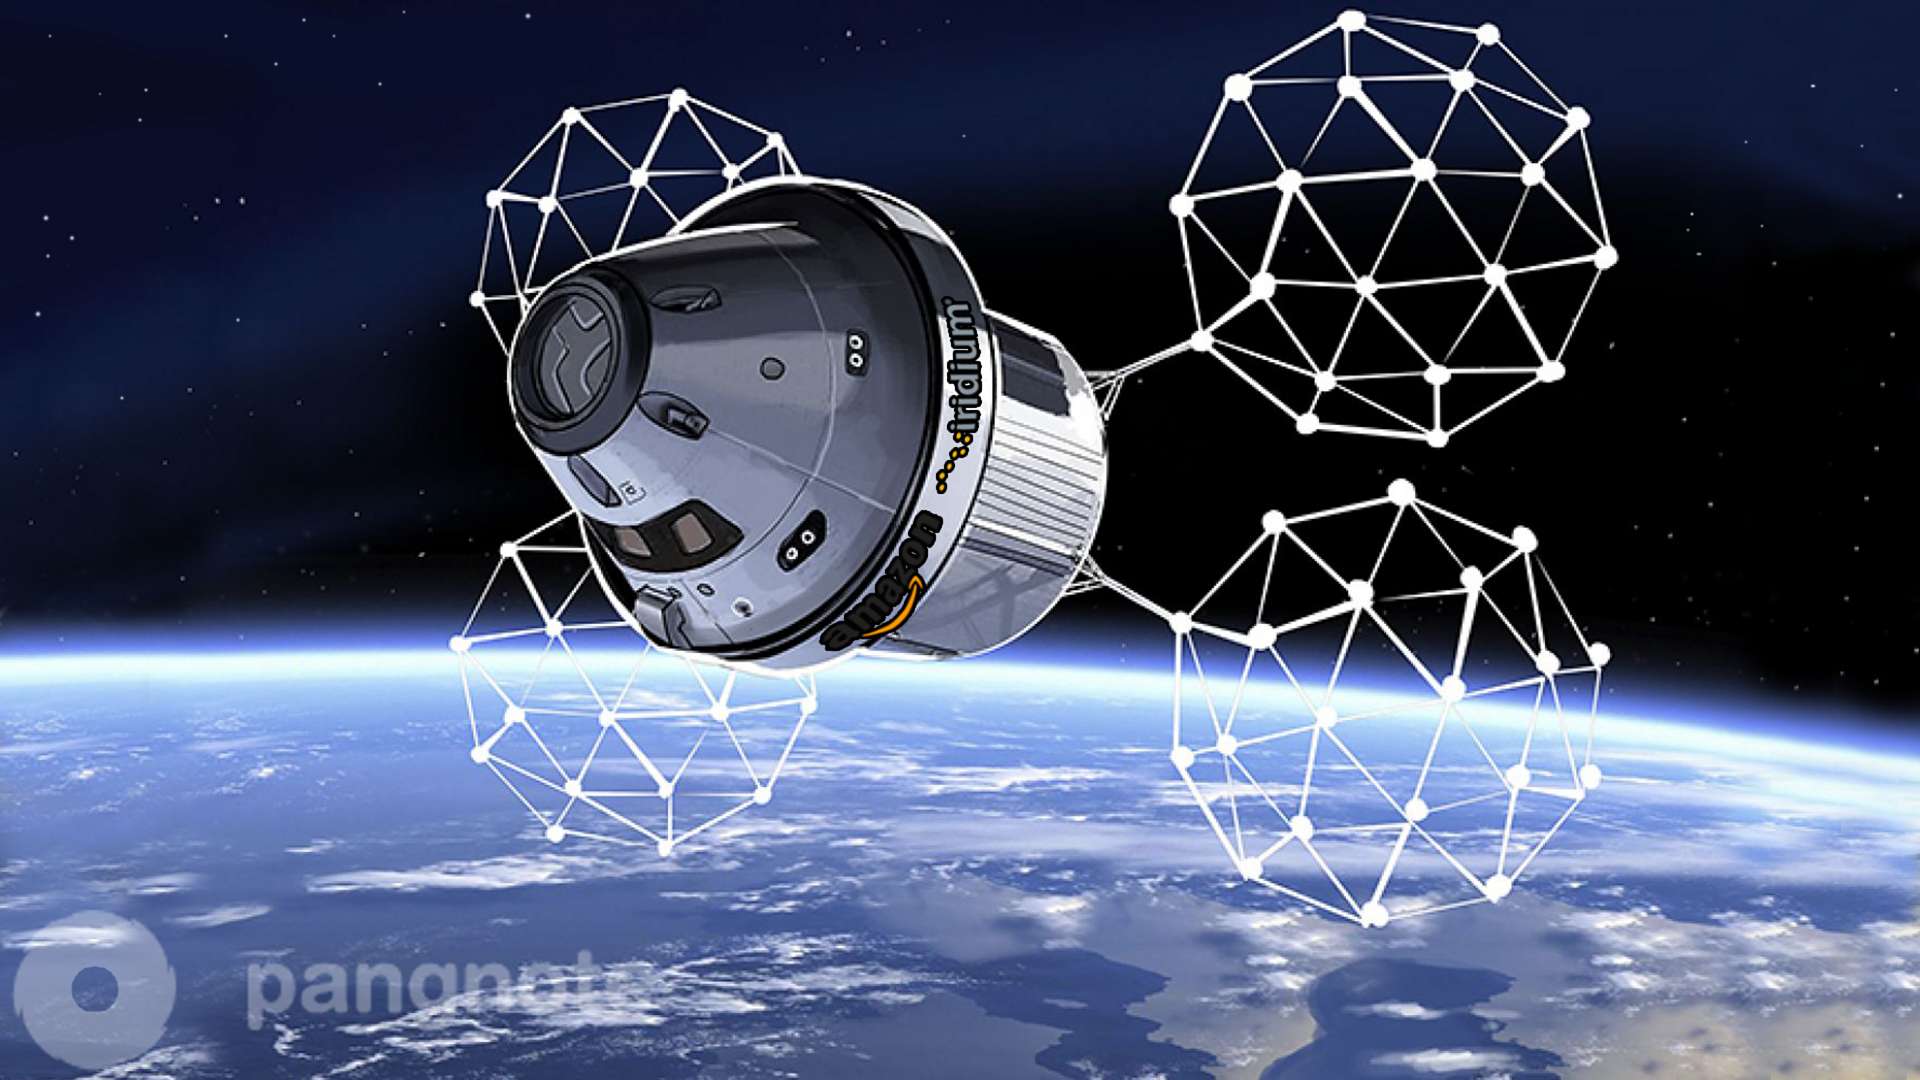 Iridium and Amazon are planning to create global satellite internet for IoT